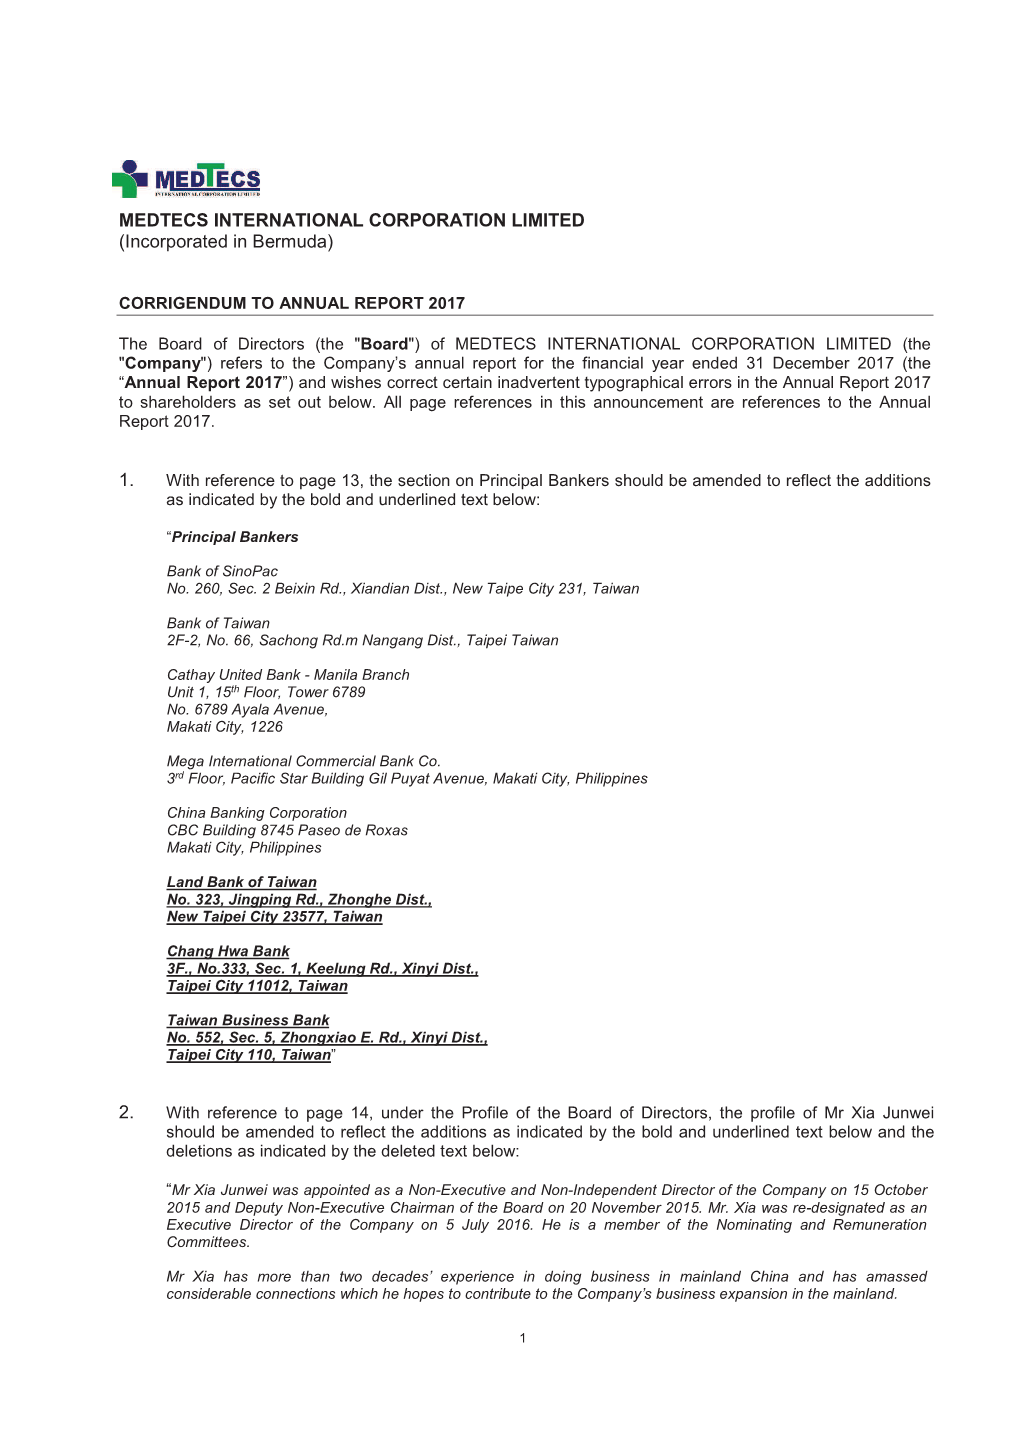 MEDTECS INTERNATIONAL CORPORATION LIMITED (Incorporated in Bermuda)